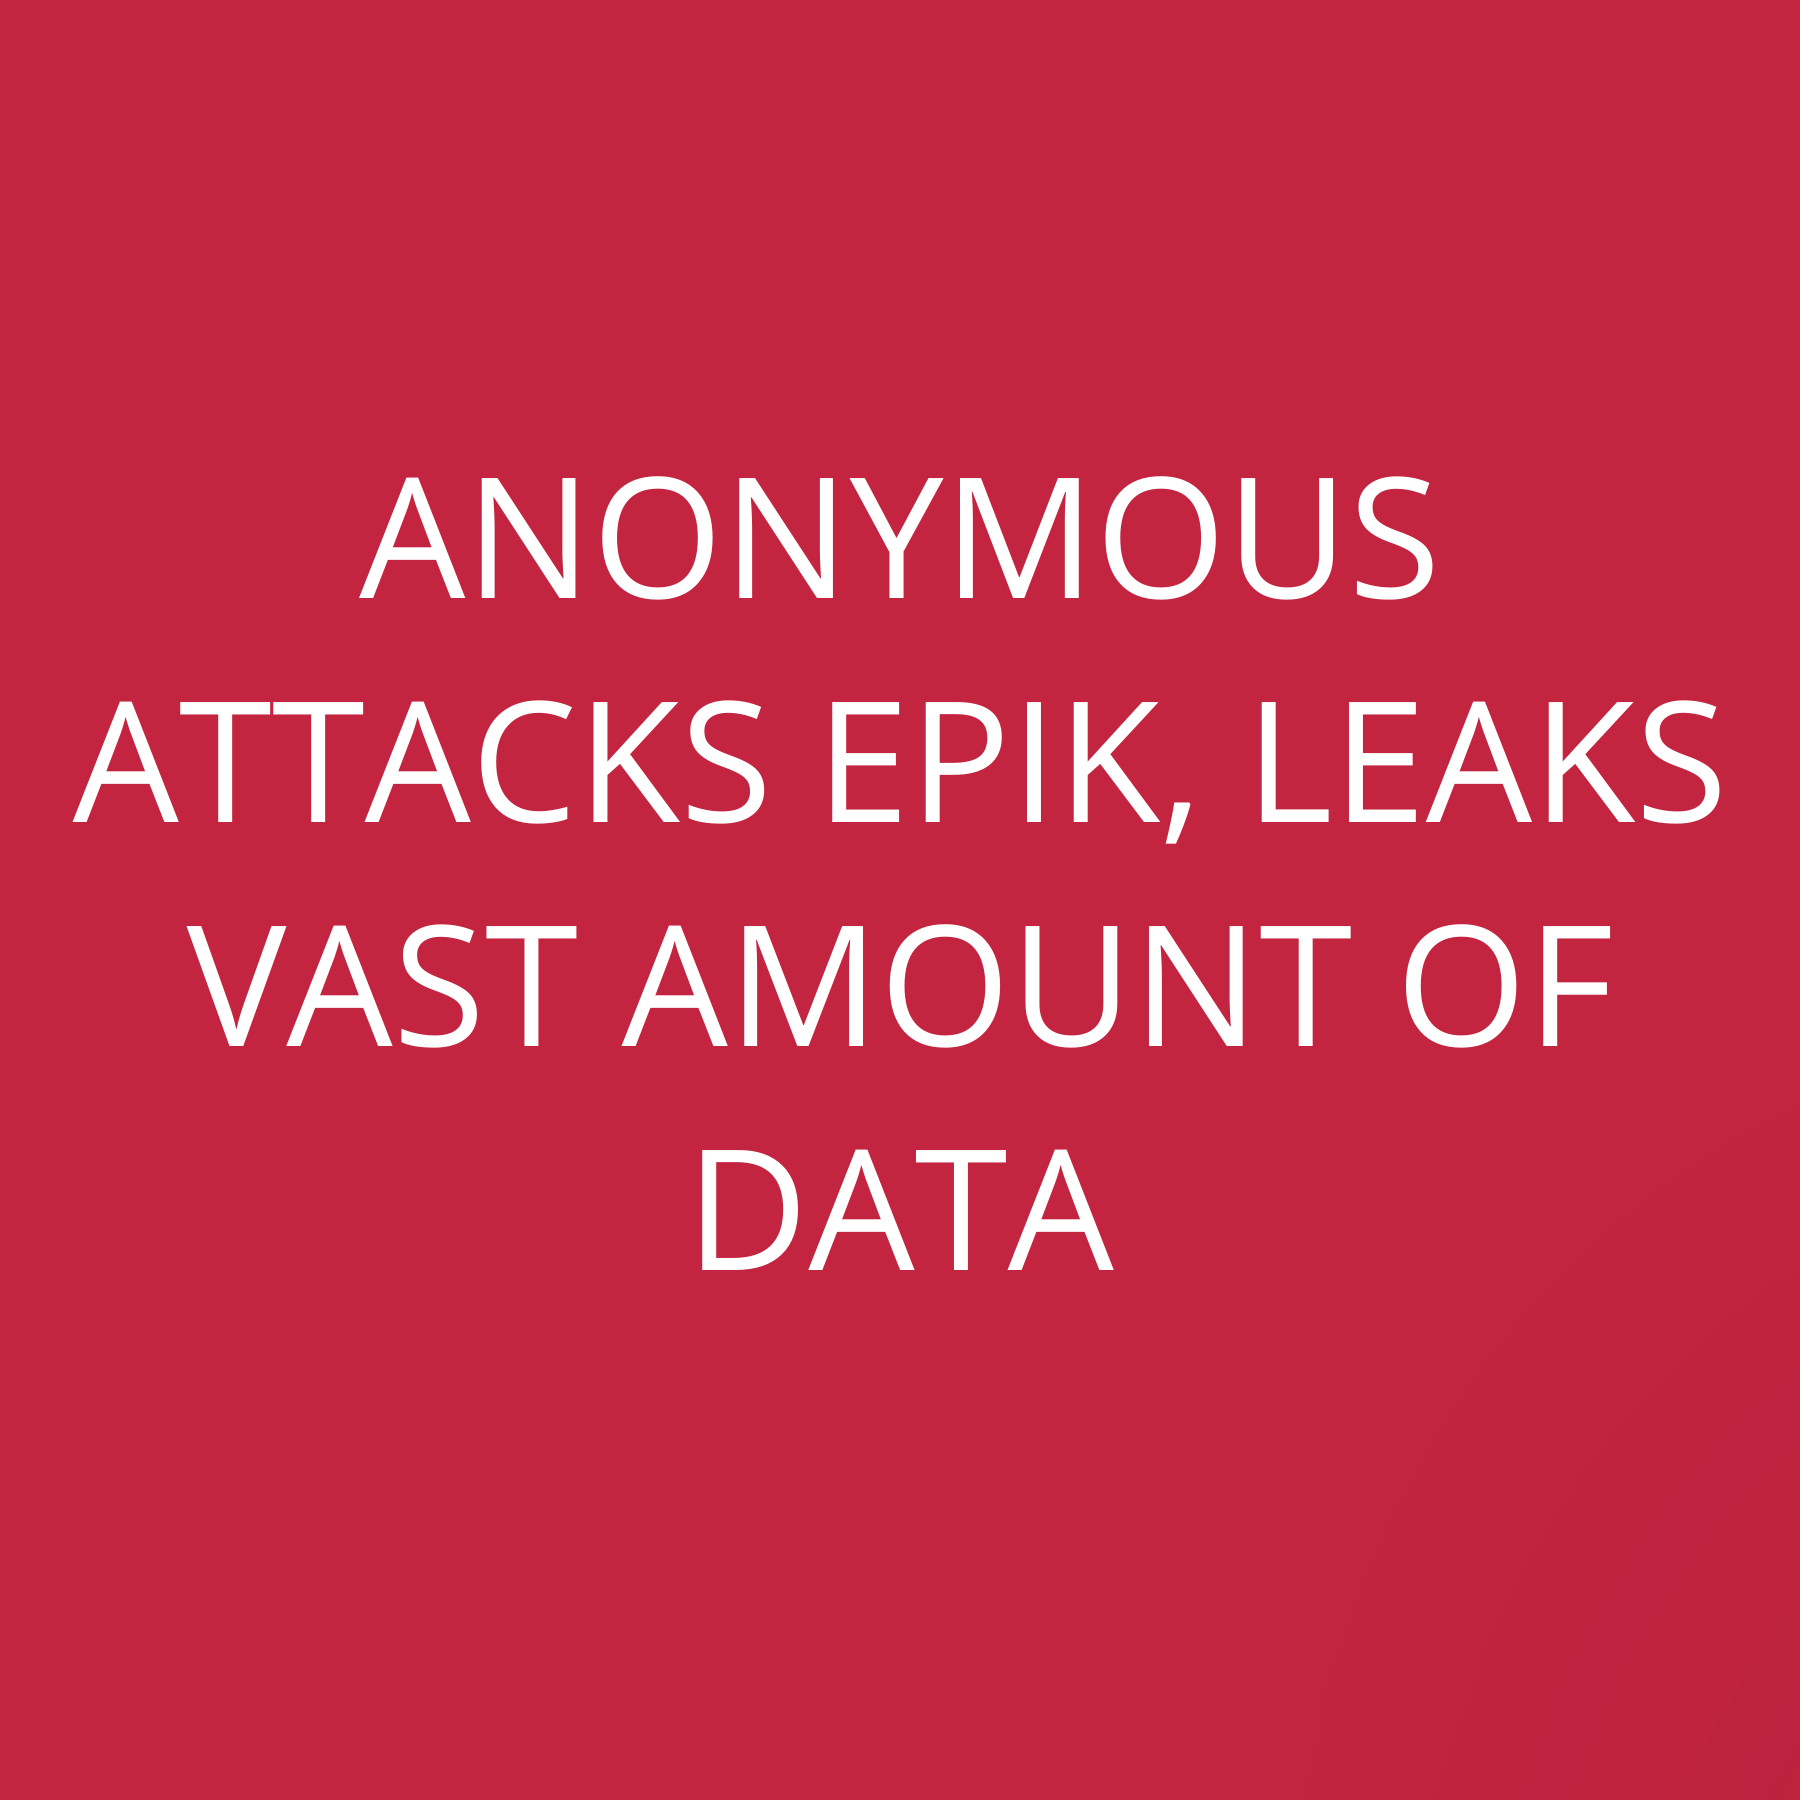 Anonymous attacks Epik, leaks vast amount of data